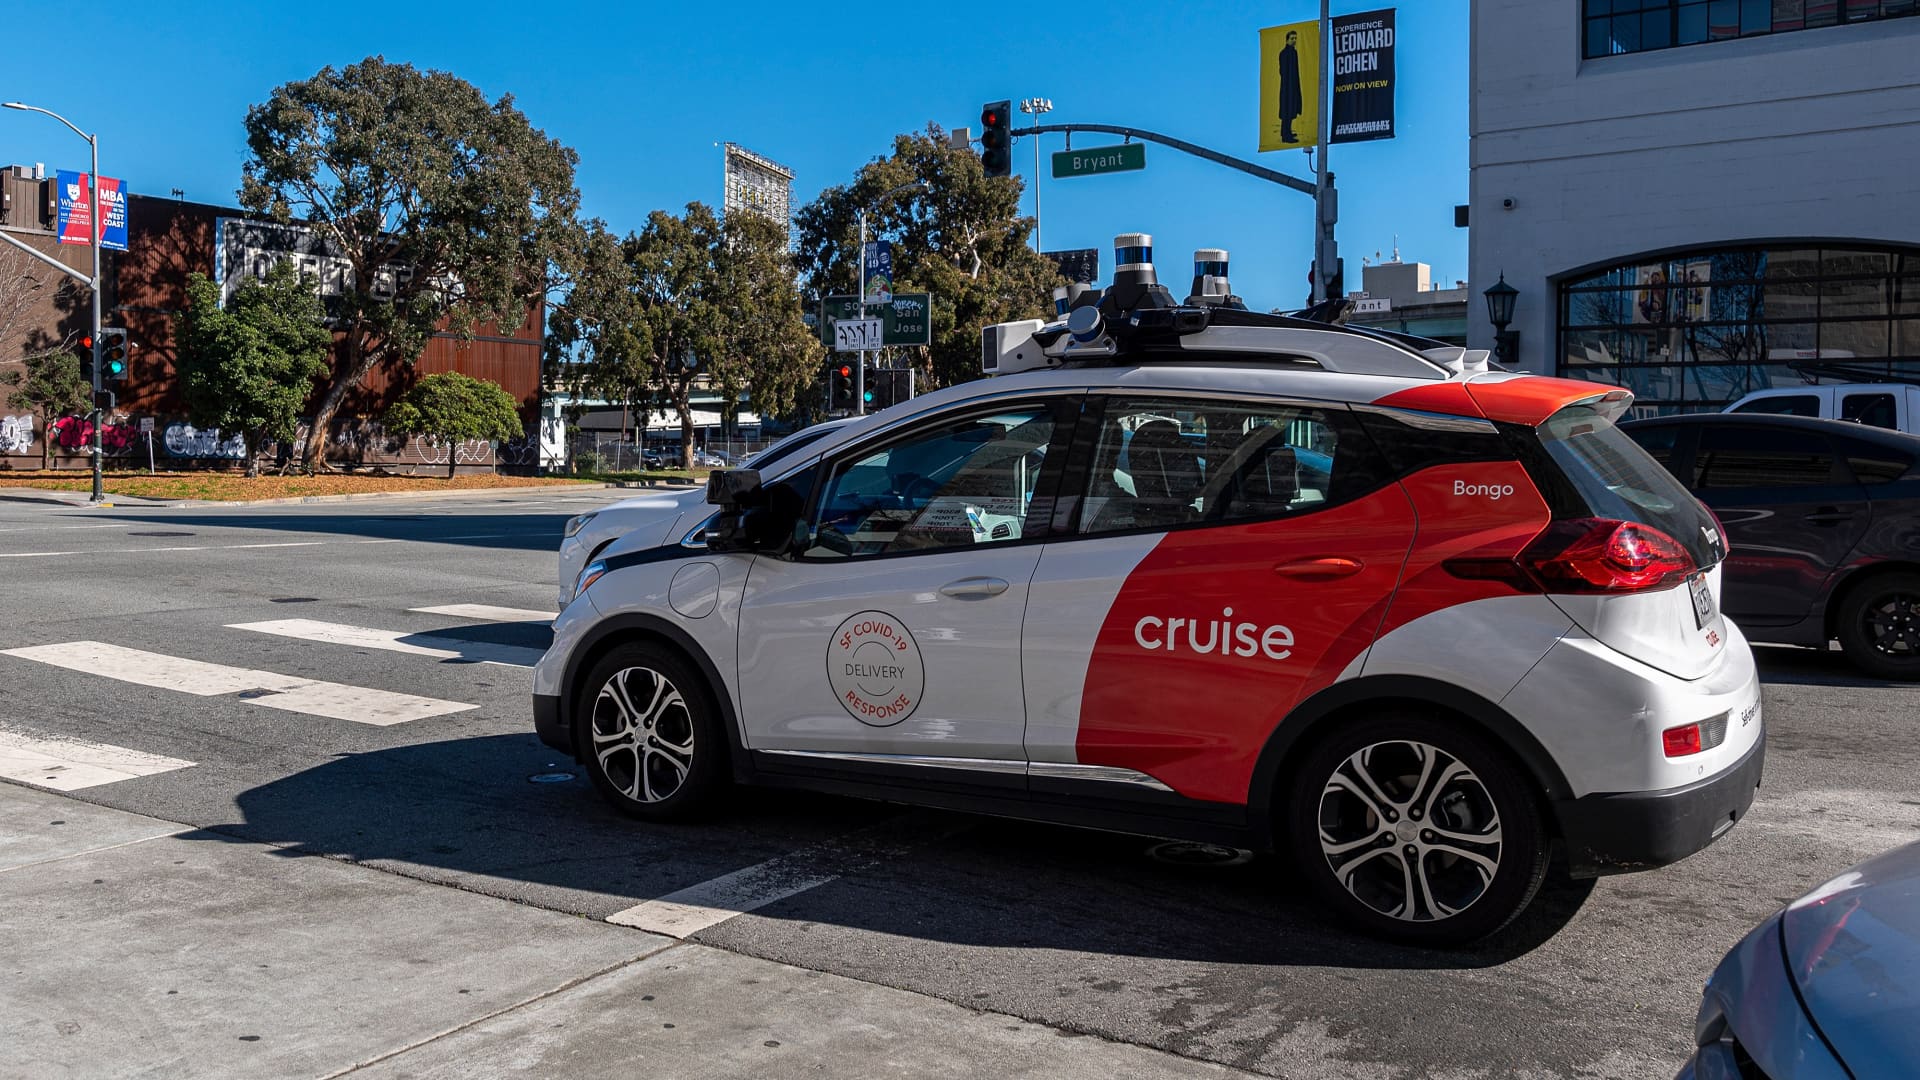 U.S. safety regulators probe GM’s Cruise self-driving cars